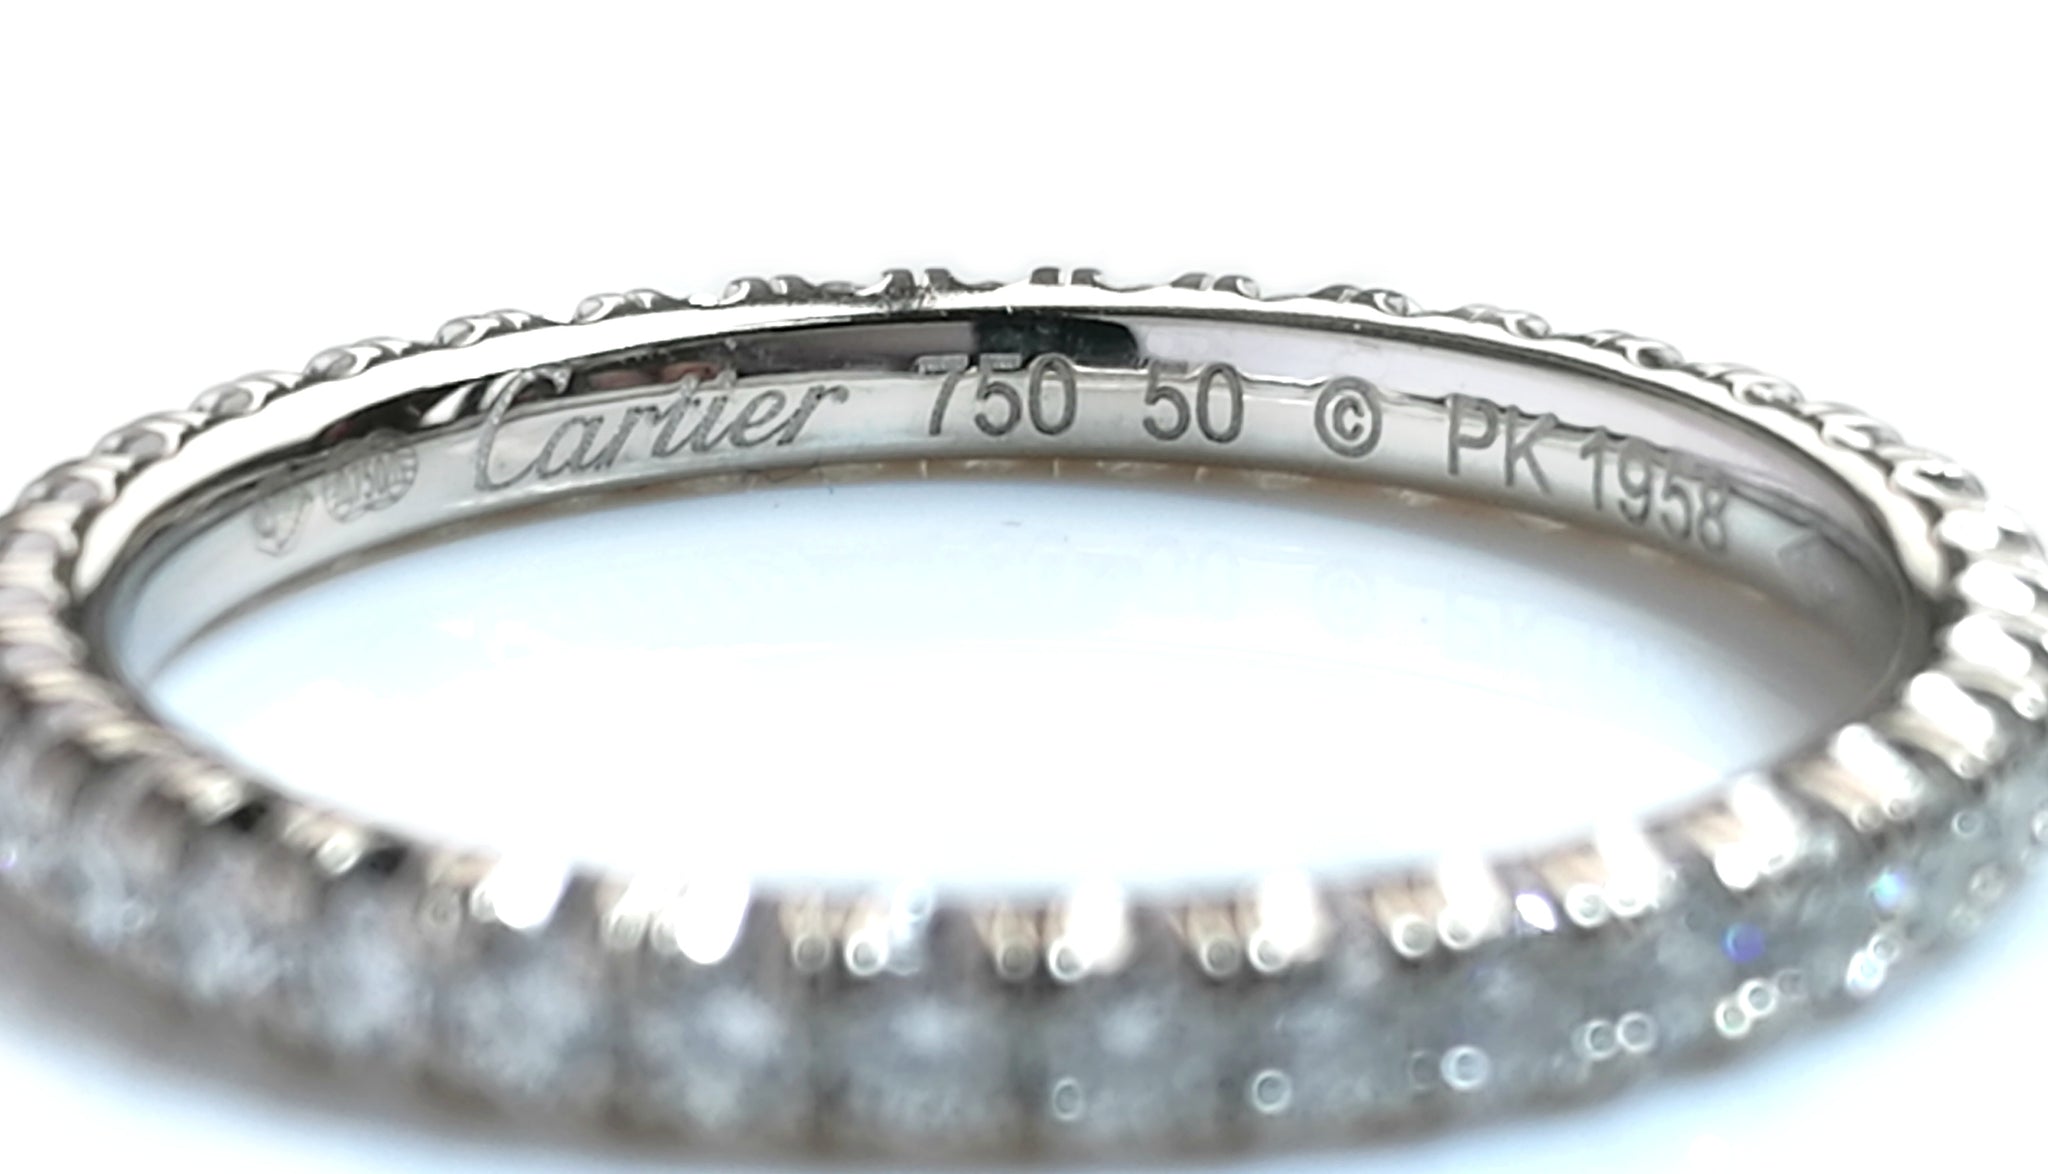  Cartier  Etincelle 0 47ct Diamond 18k White  Gold  2mm 